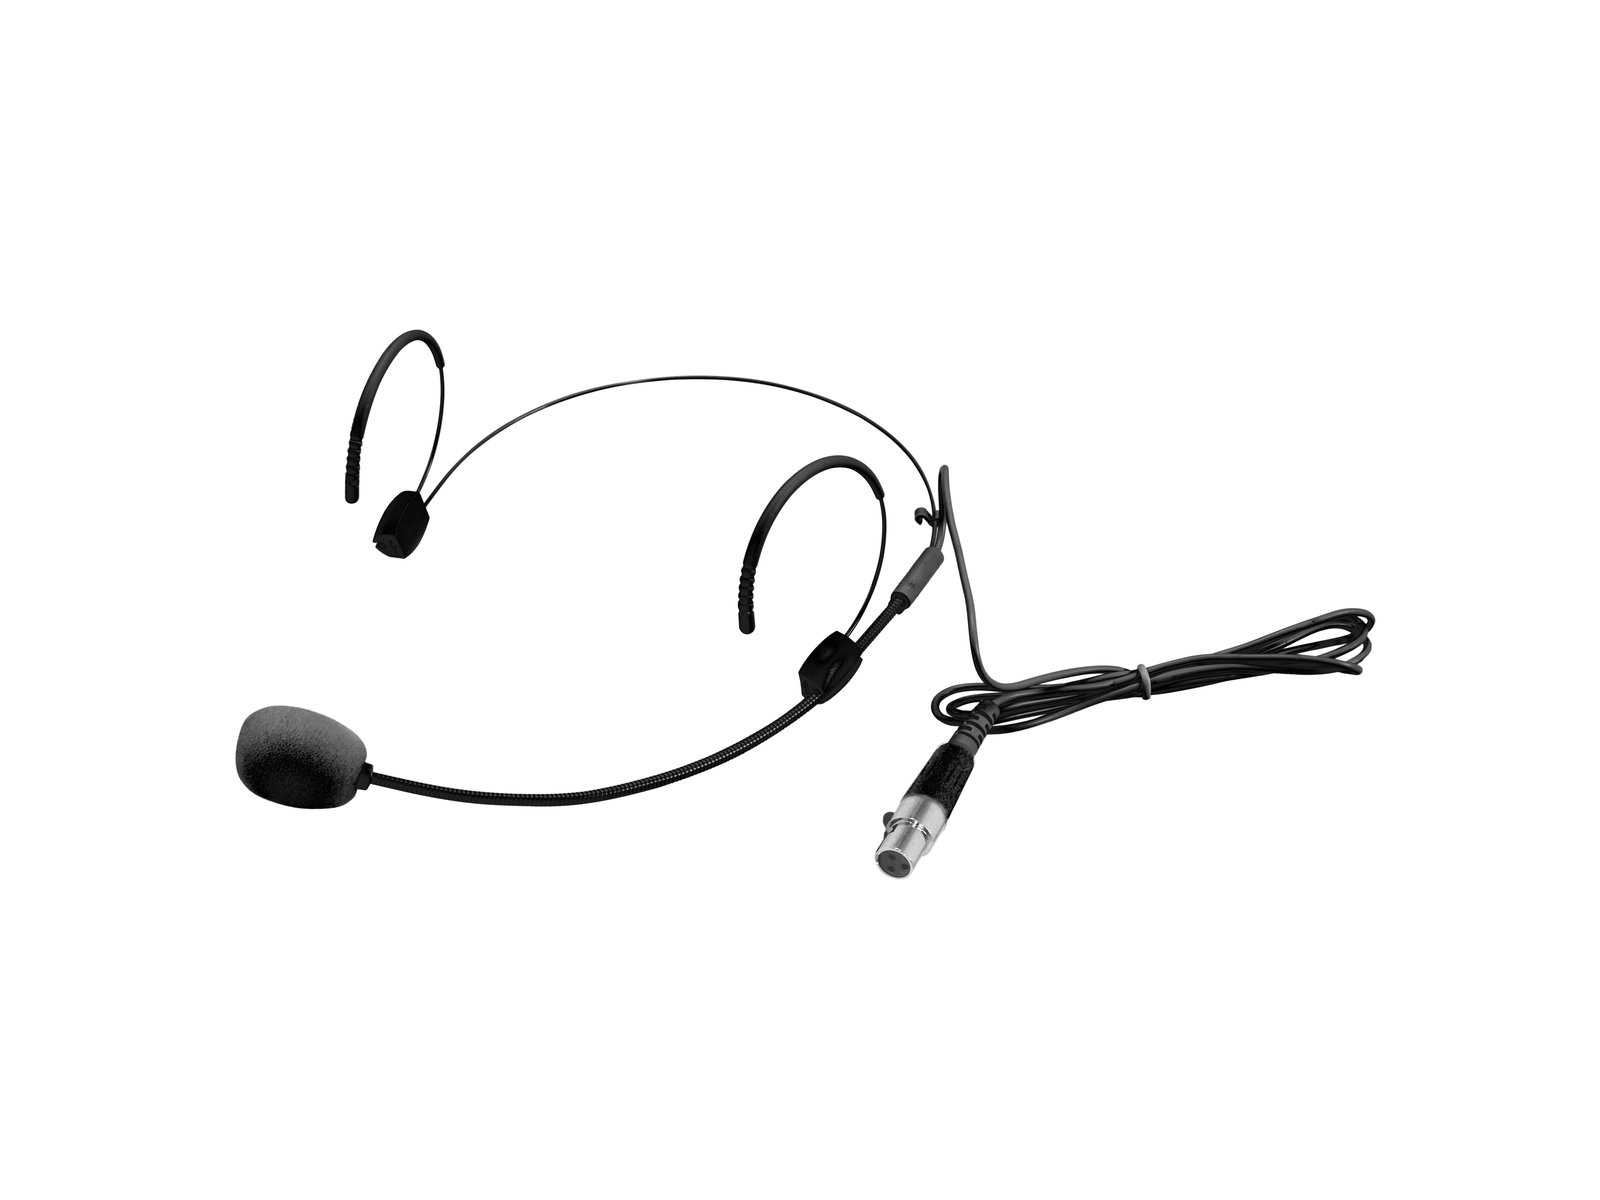 OMNITRONIC UHF-300 Headset Microphone black